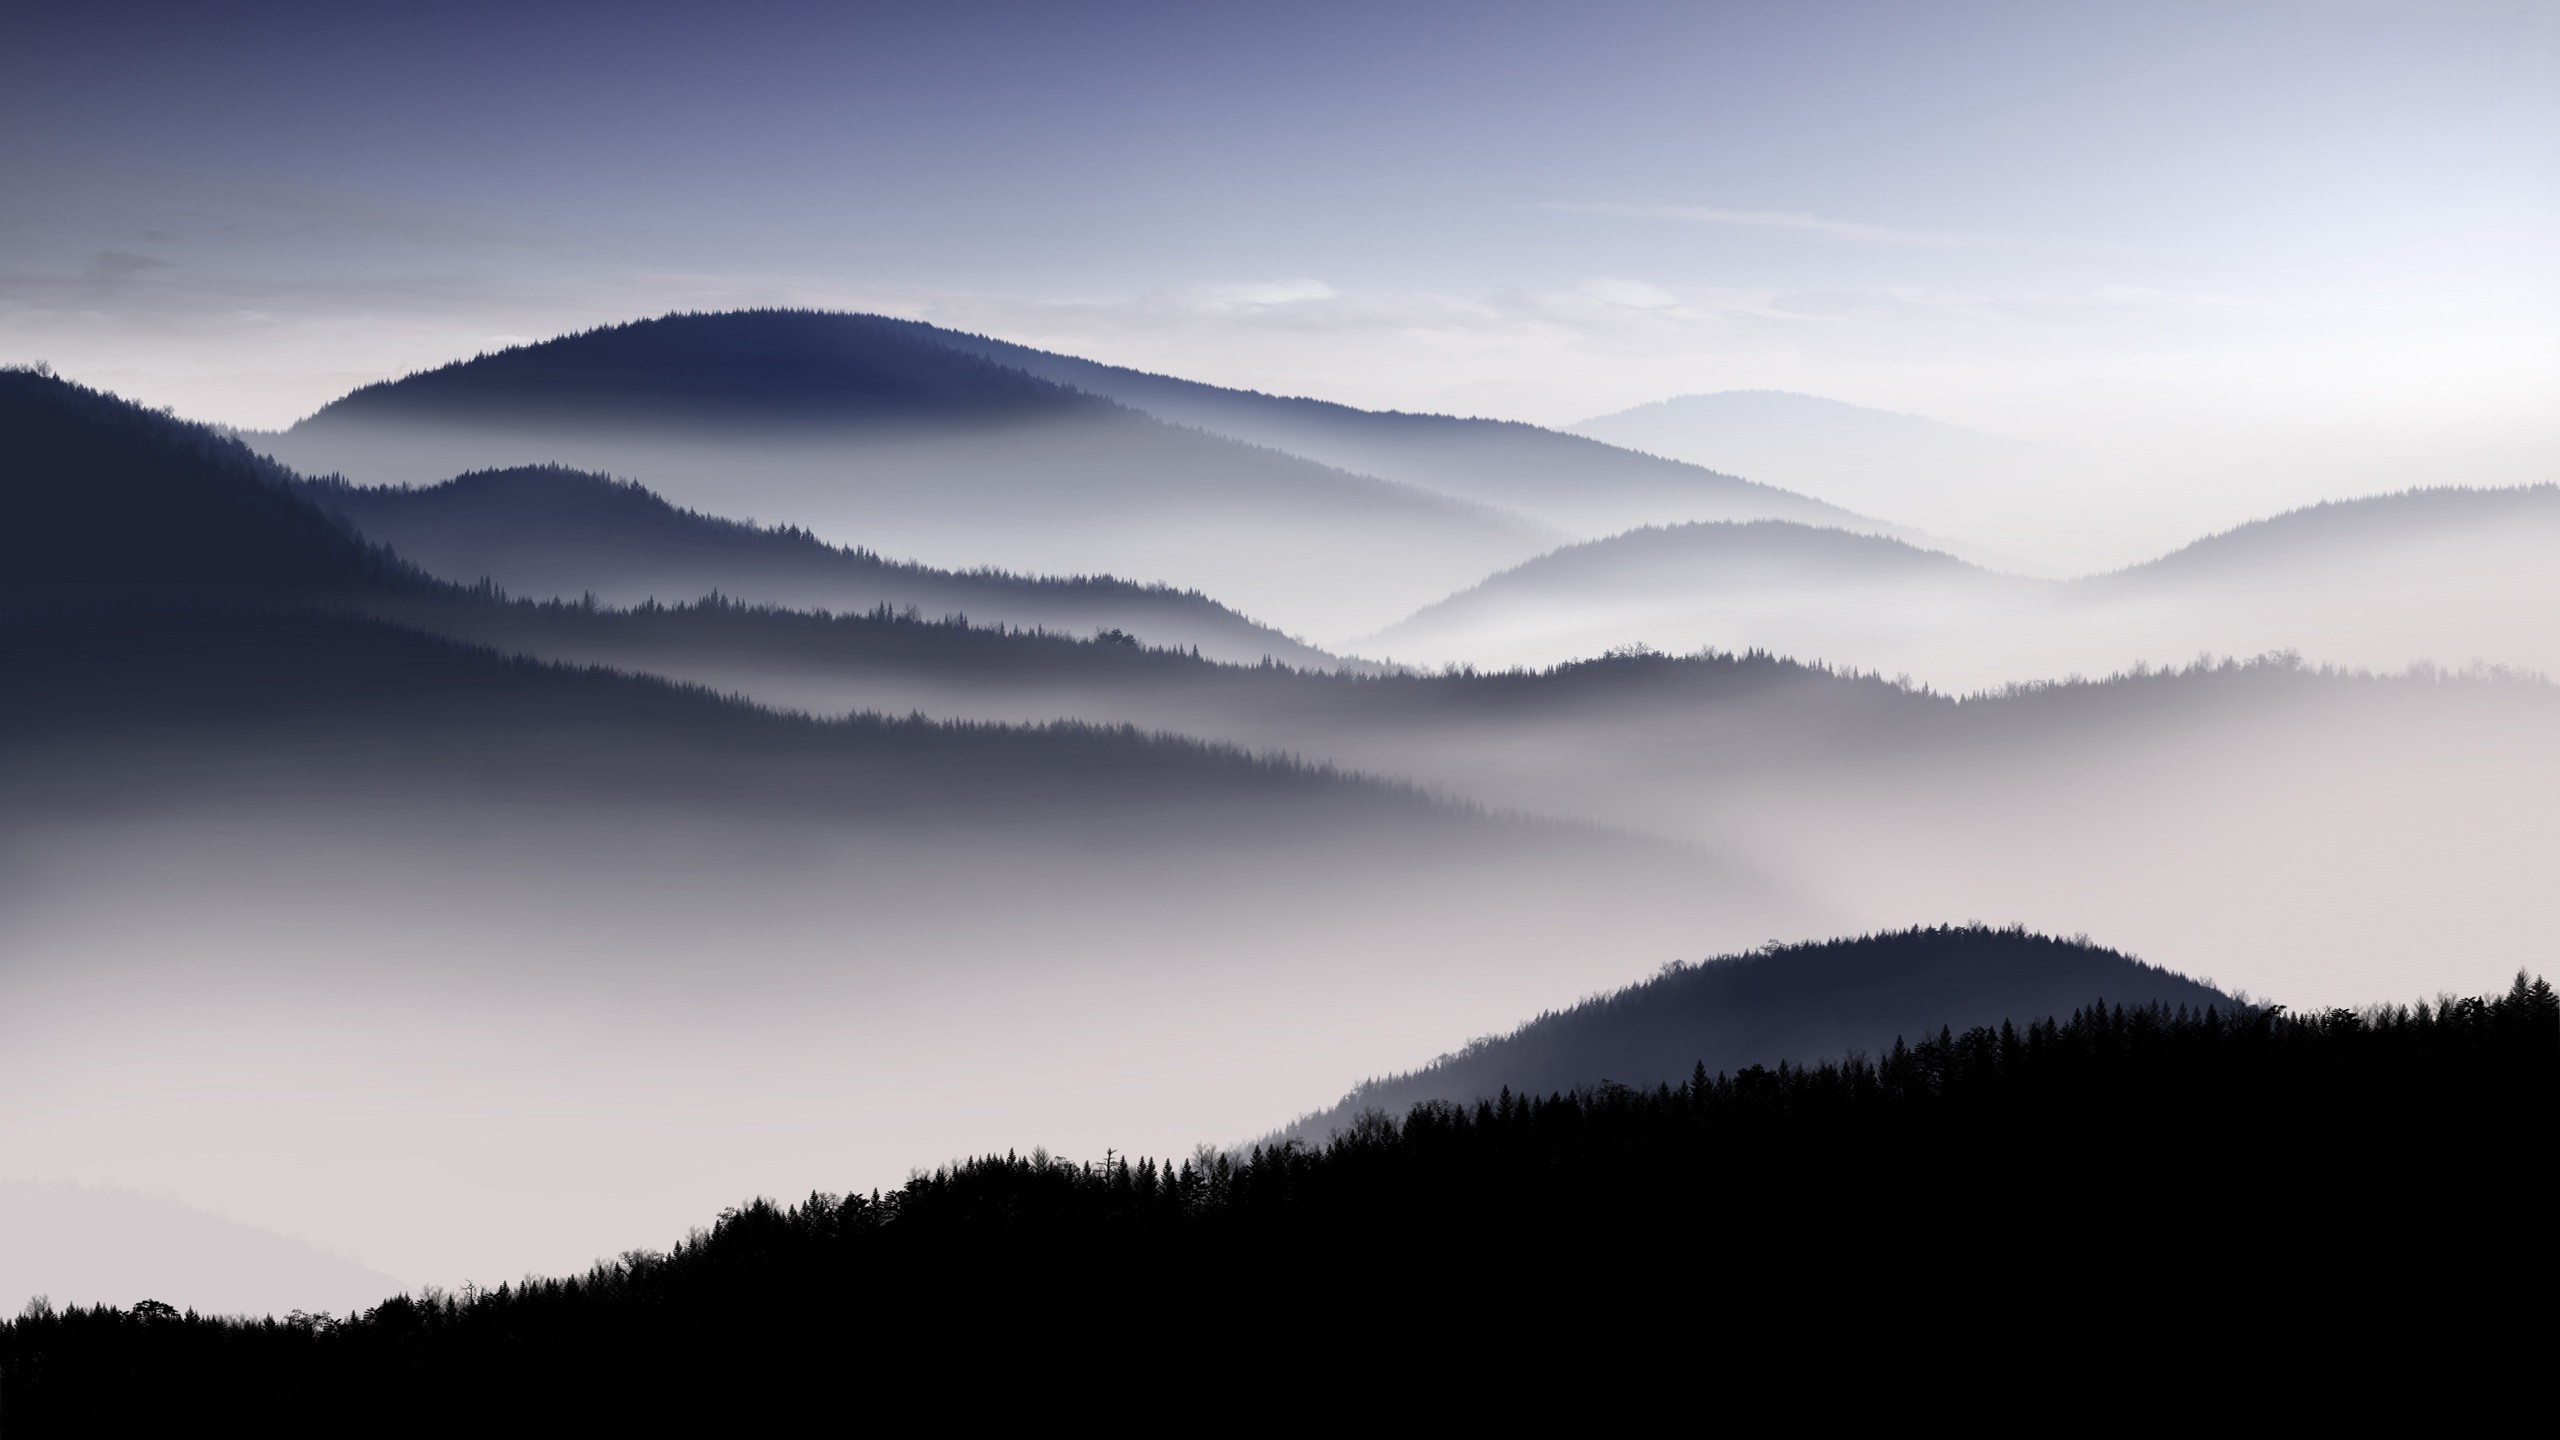 General 2560x1440 photography landscape nature mist mountains hills low light